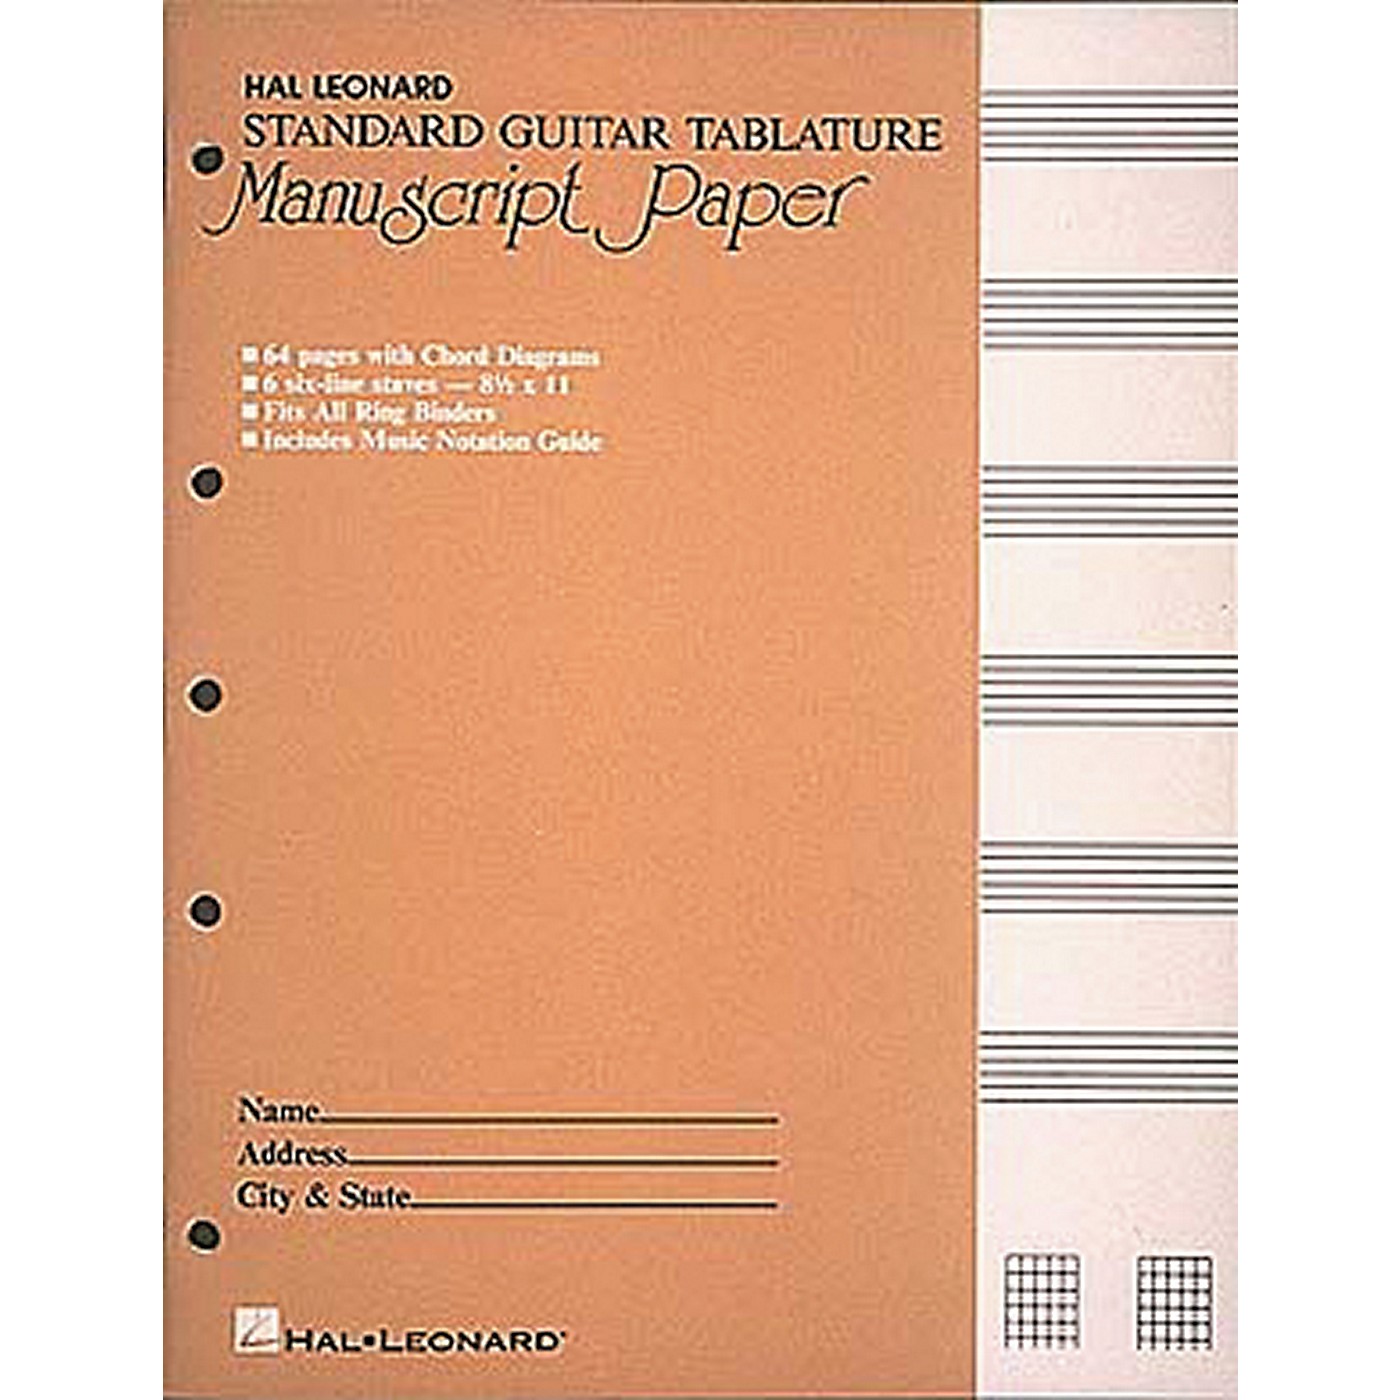 Hal Leonard Standard Guitar Tablature Manuscript Paper thumbnail